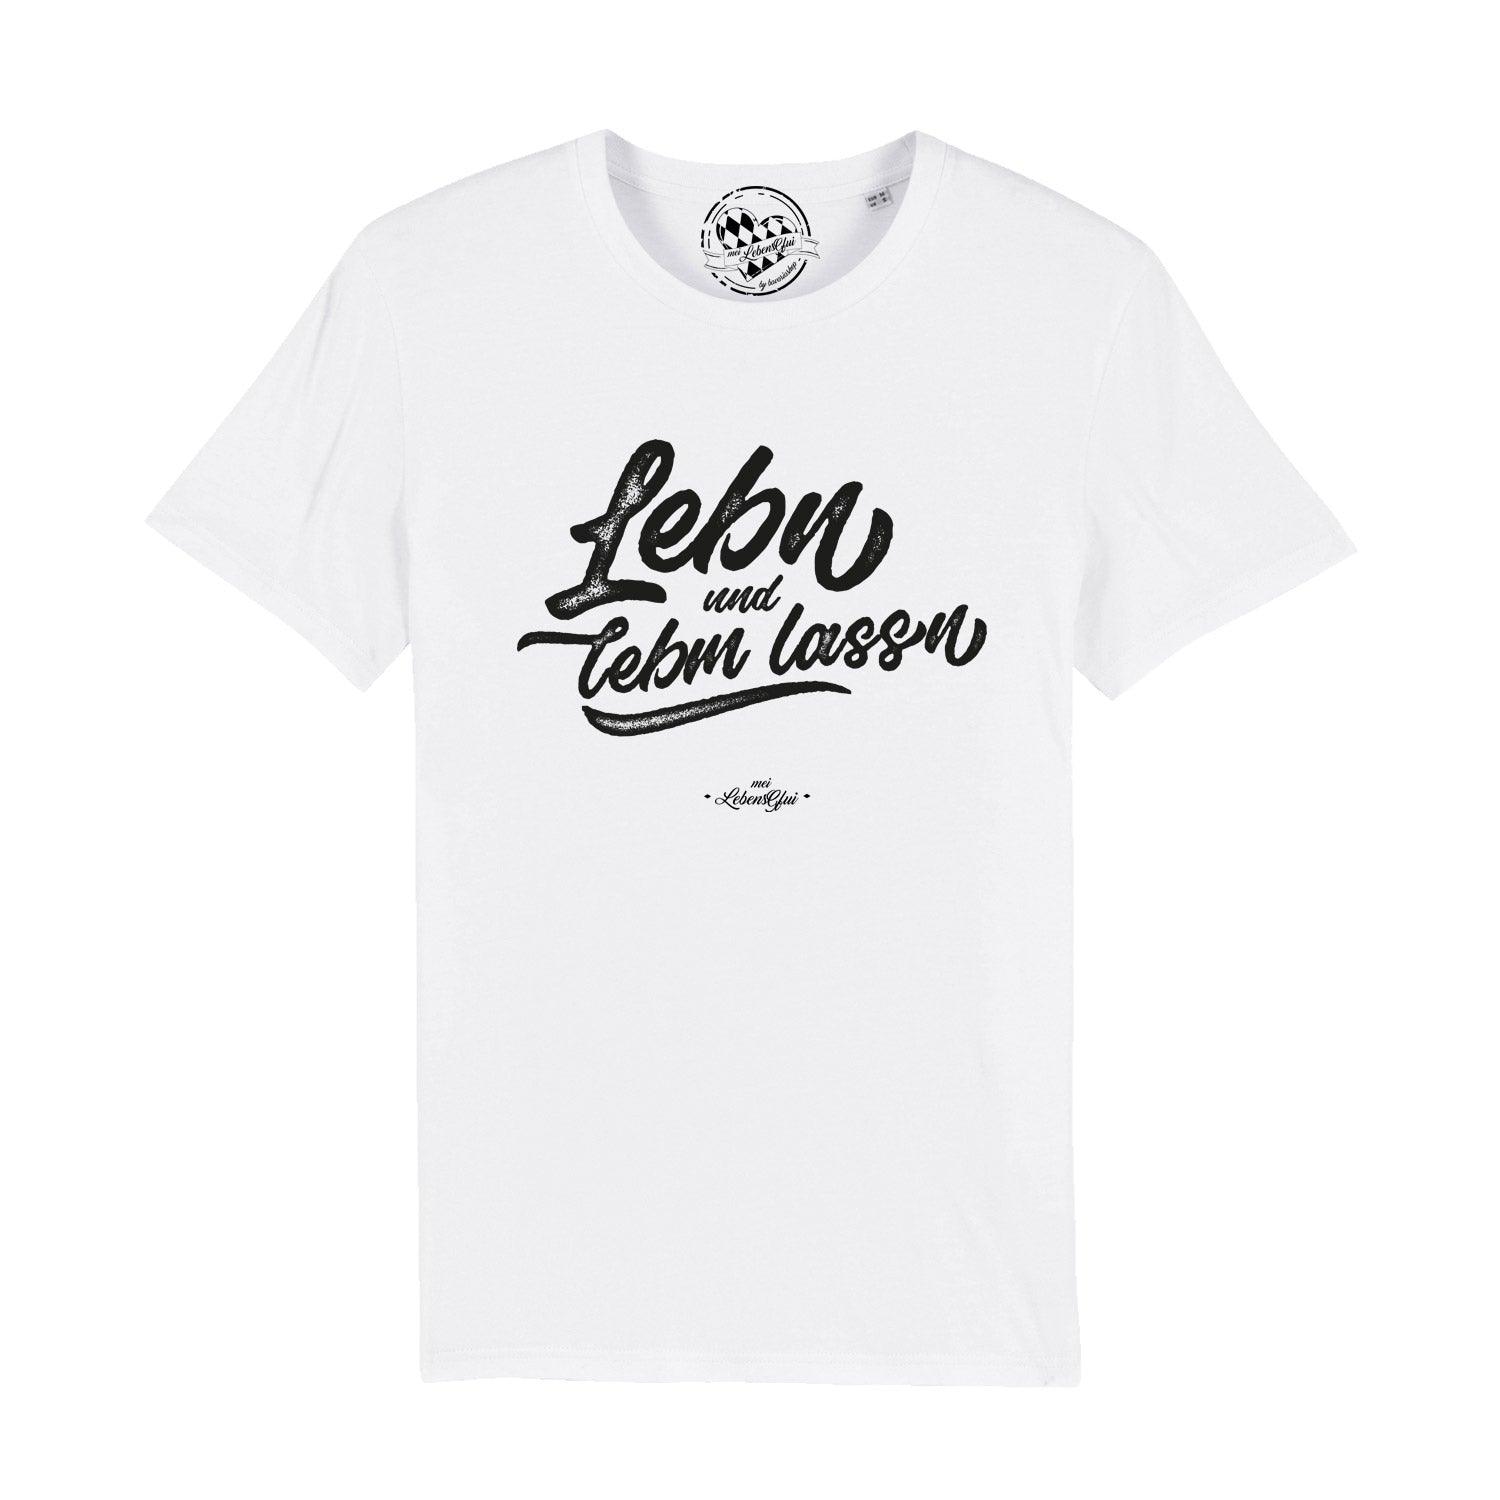 Herren T-Shirt "Lebn und lebm lassn" - bavariashop - mei LebensGfui